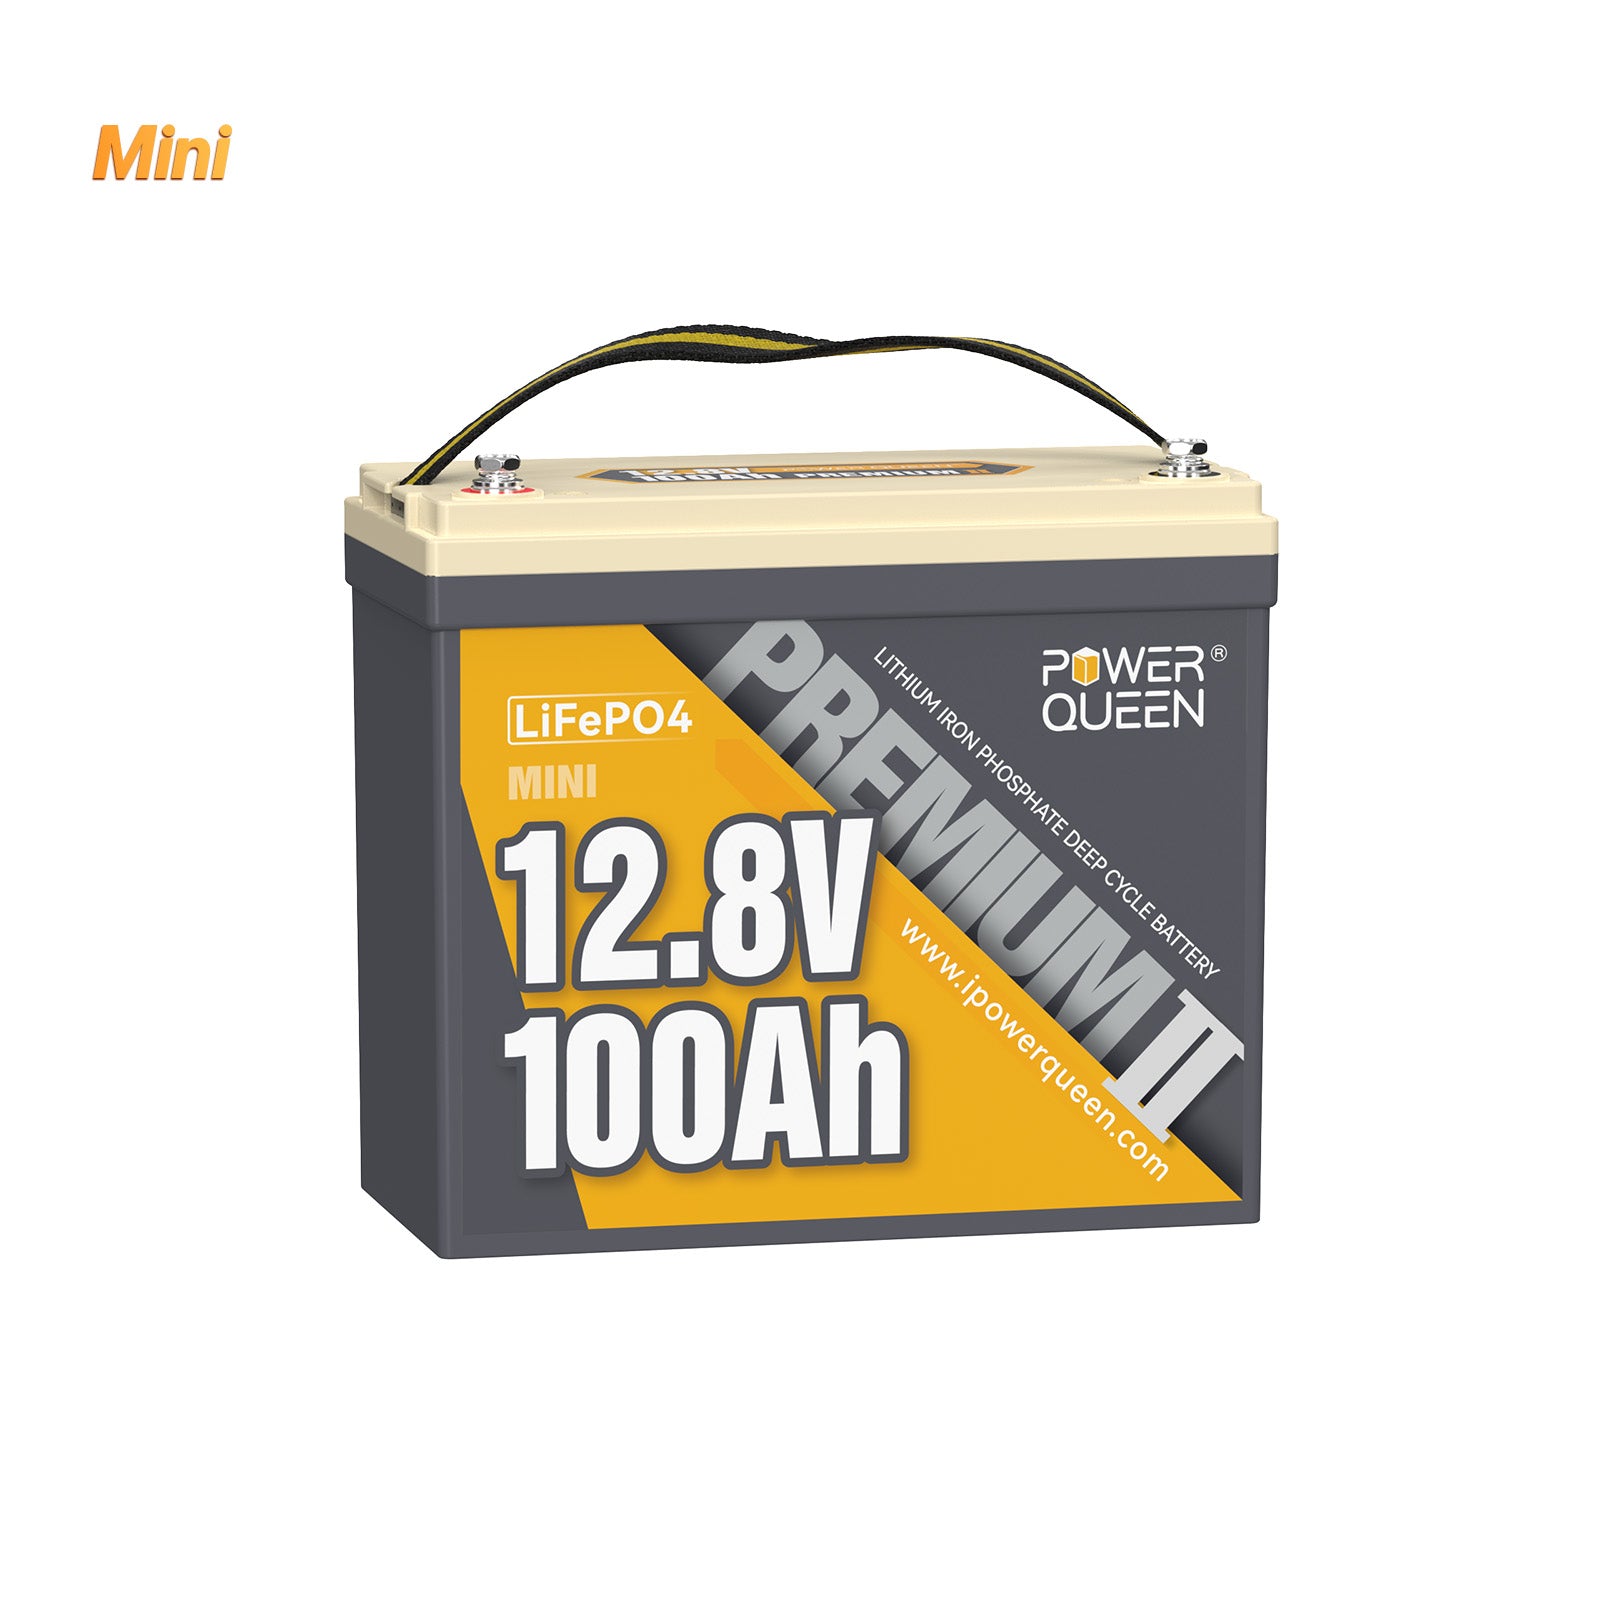 Batería Power Queen Mini LiFePO4 de 12,8 V y 100 Ah, BMS integrado de 100 A